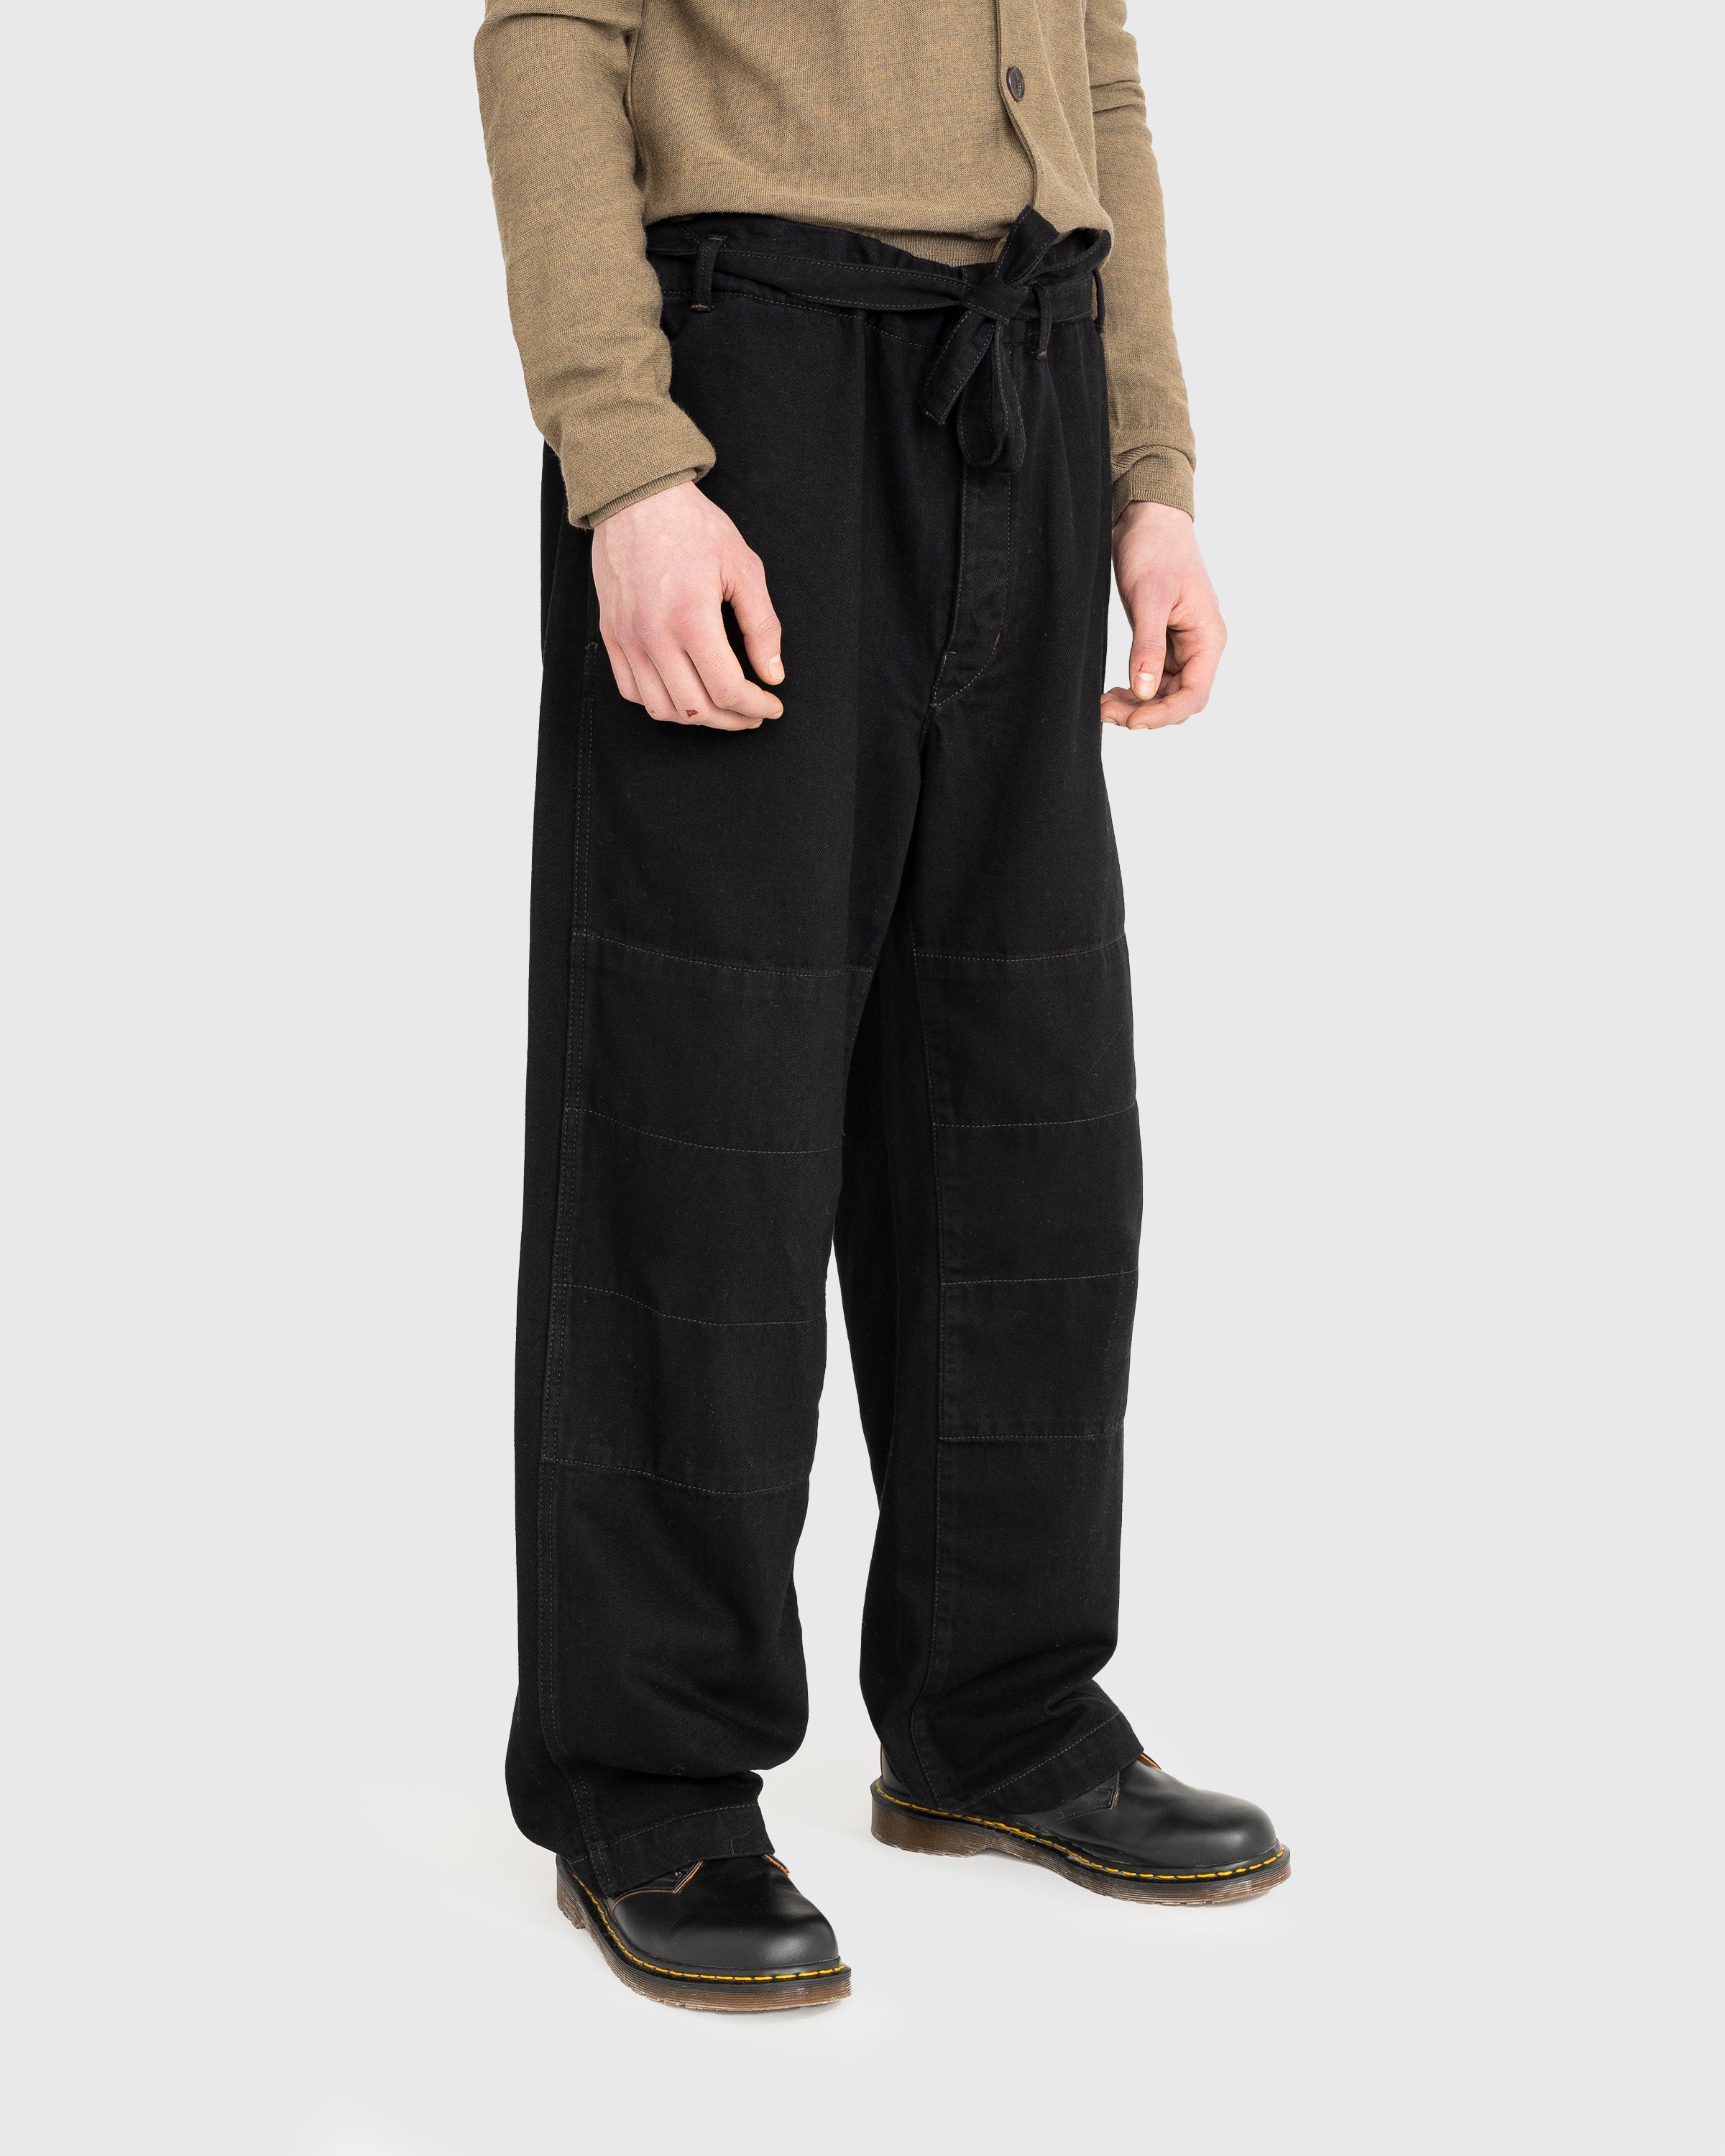 Lemaire - Judo Pants - Clothing - Black - Image 4